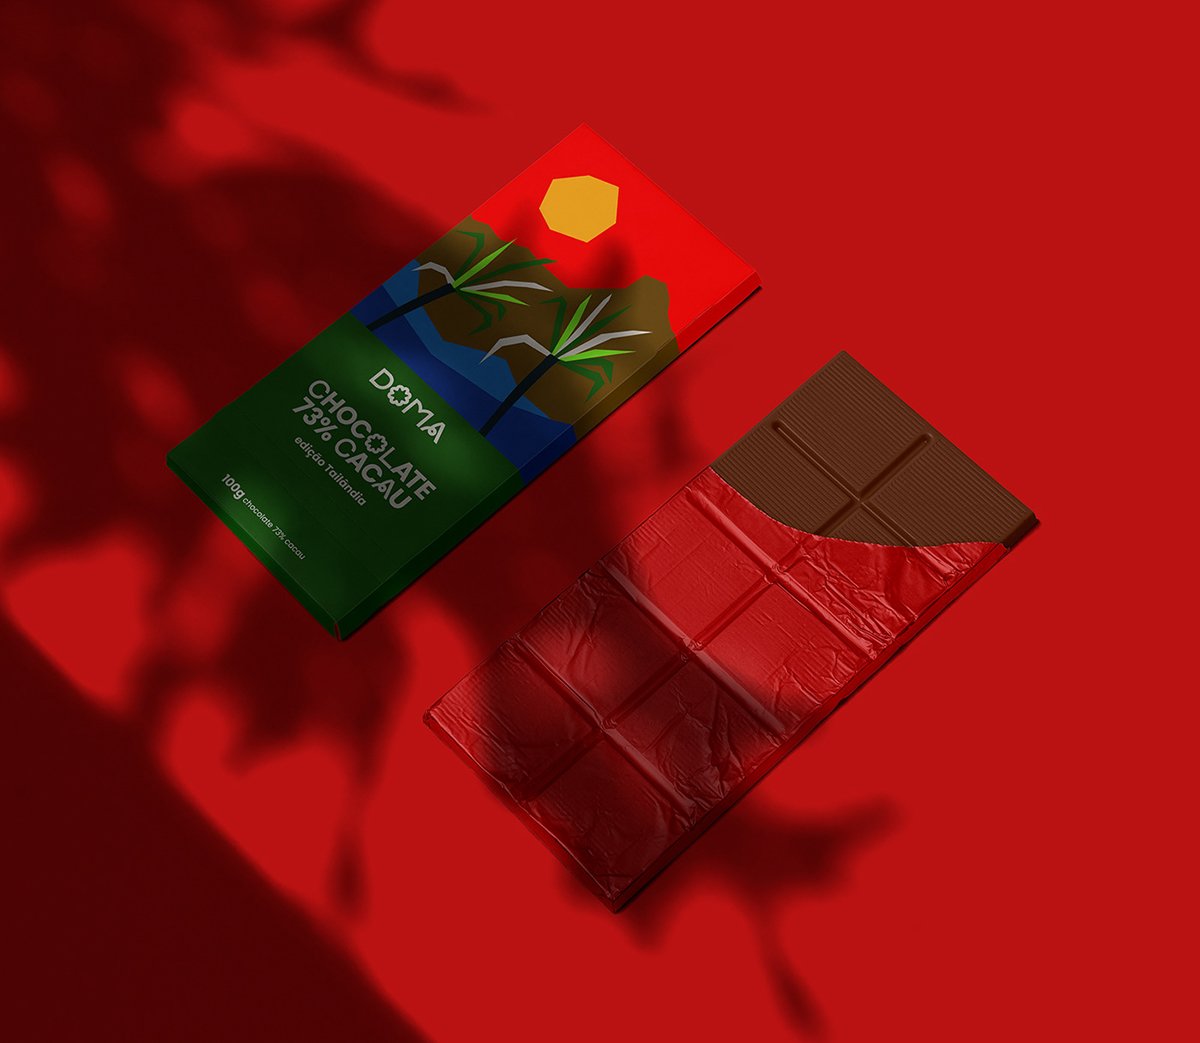 Inspirational Minimalistic Chocolate Packaging Design